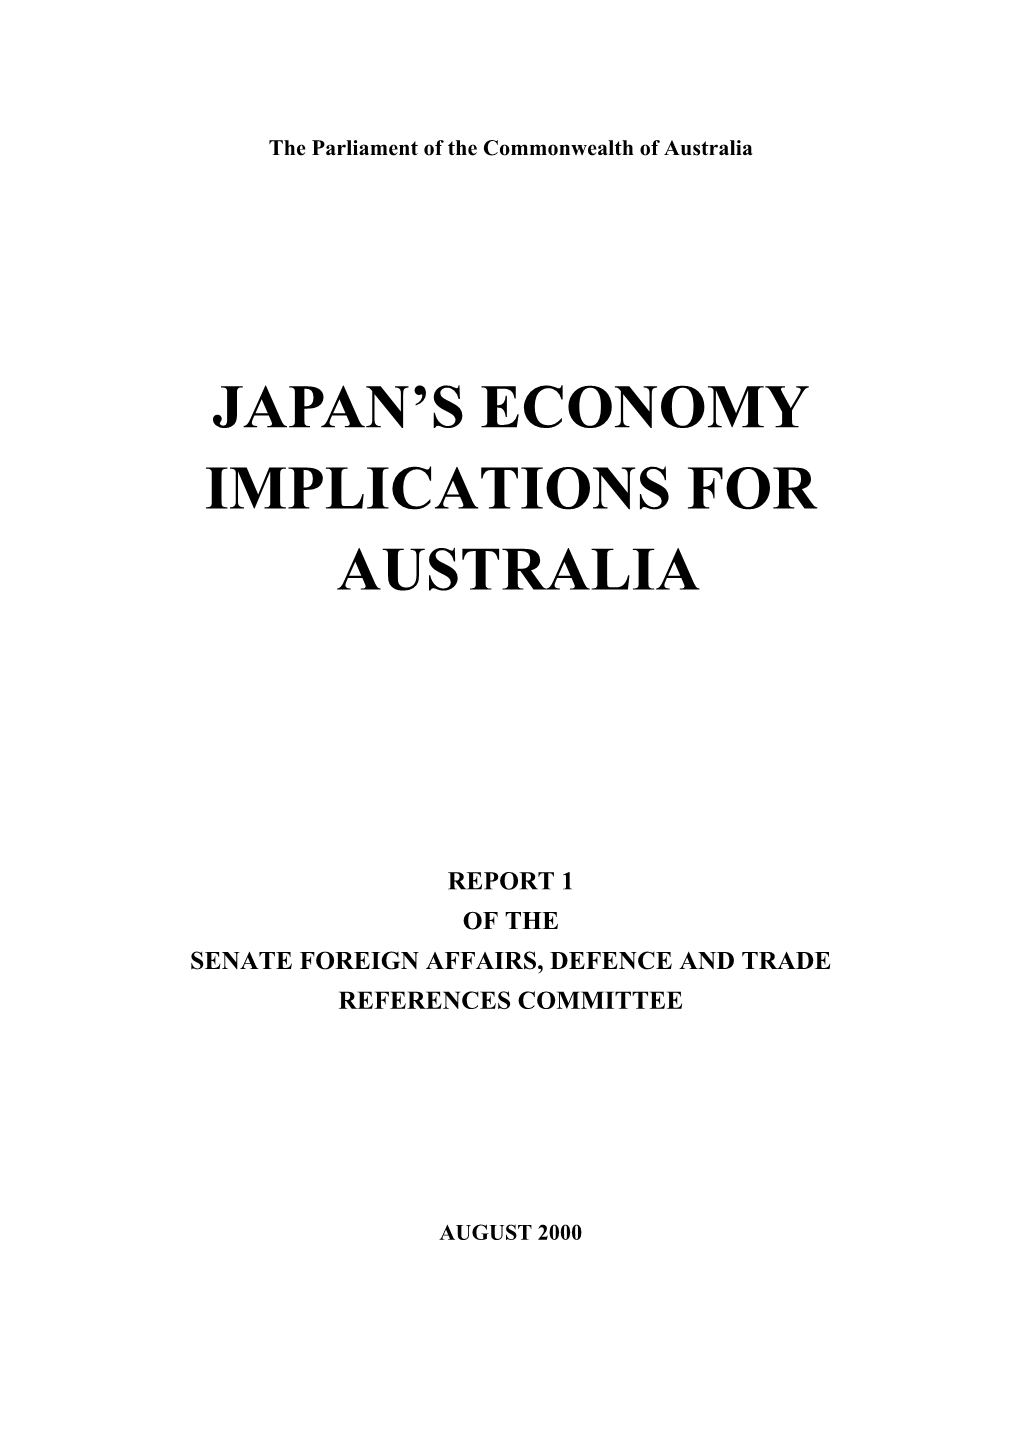 Japan's Economy Implications for Australia